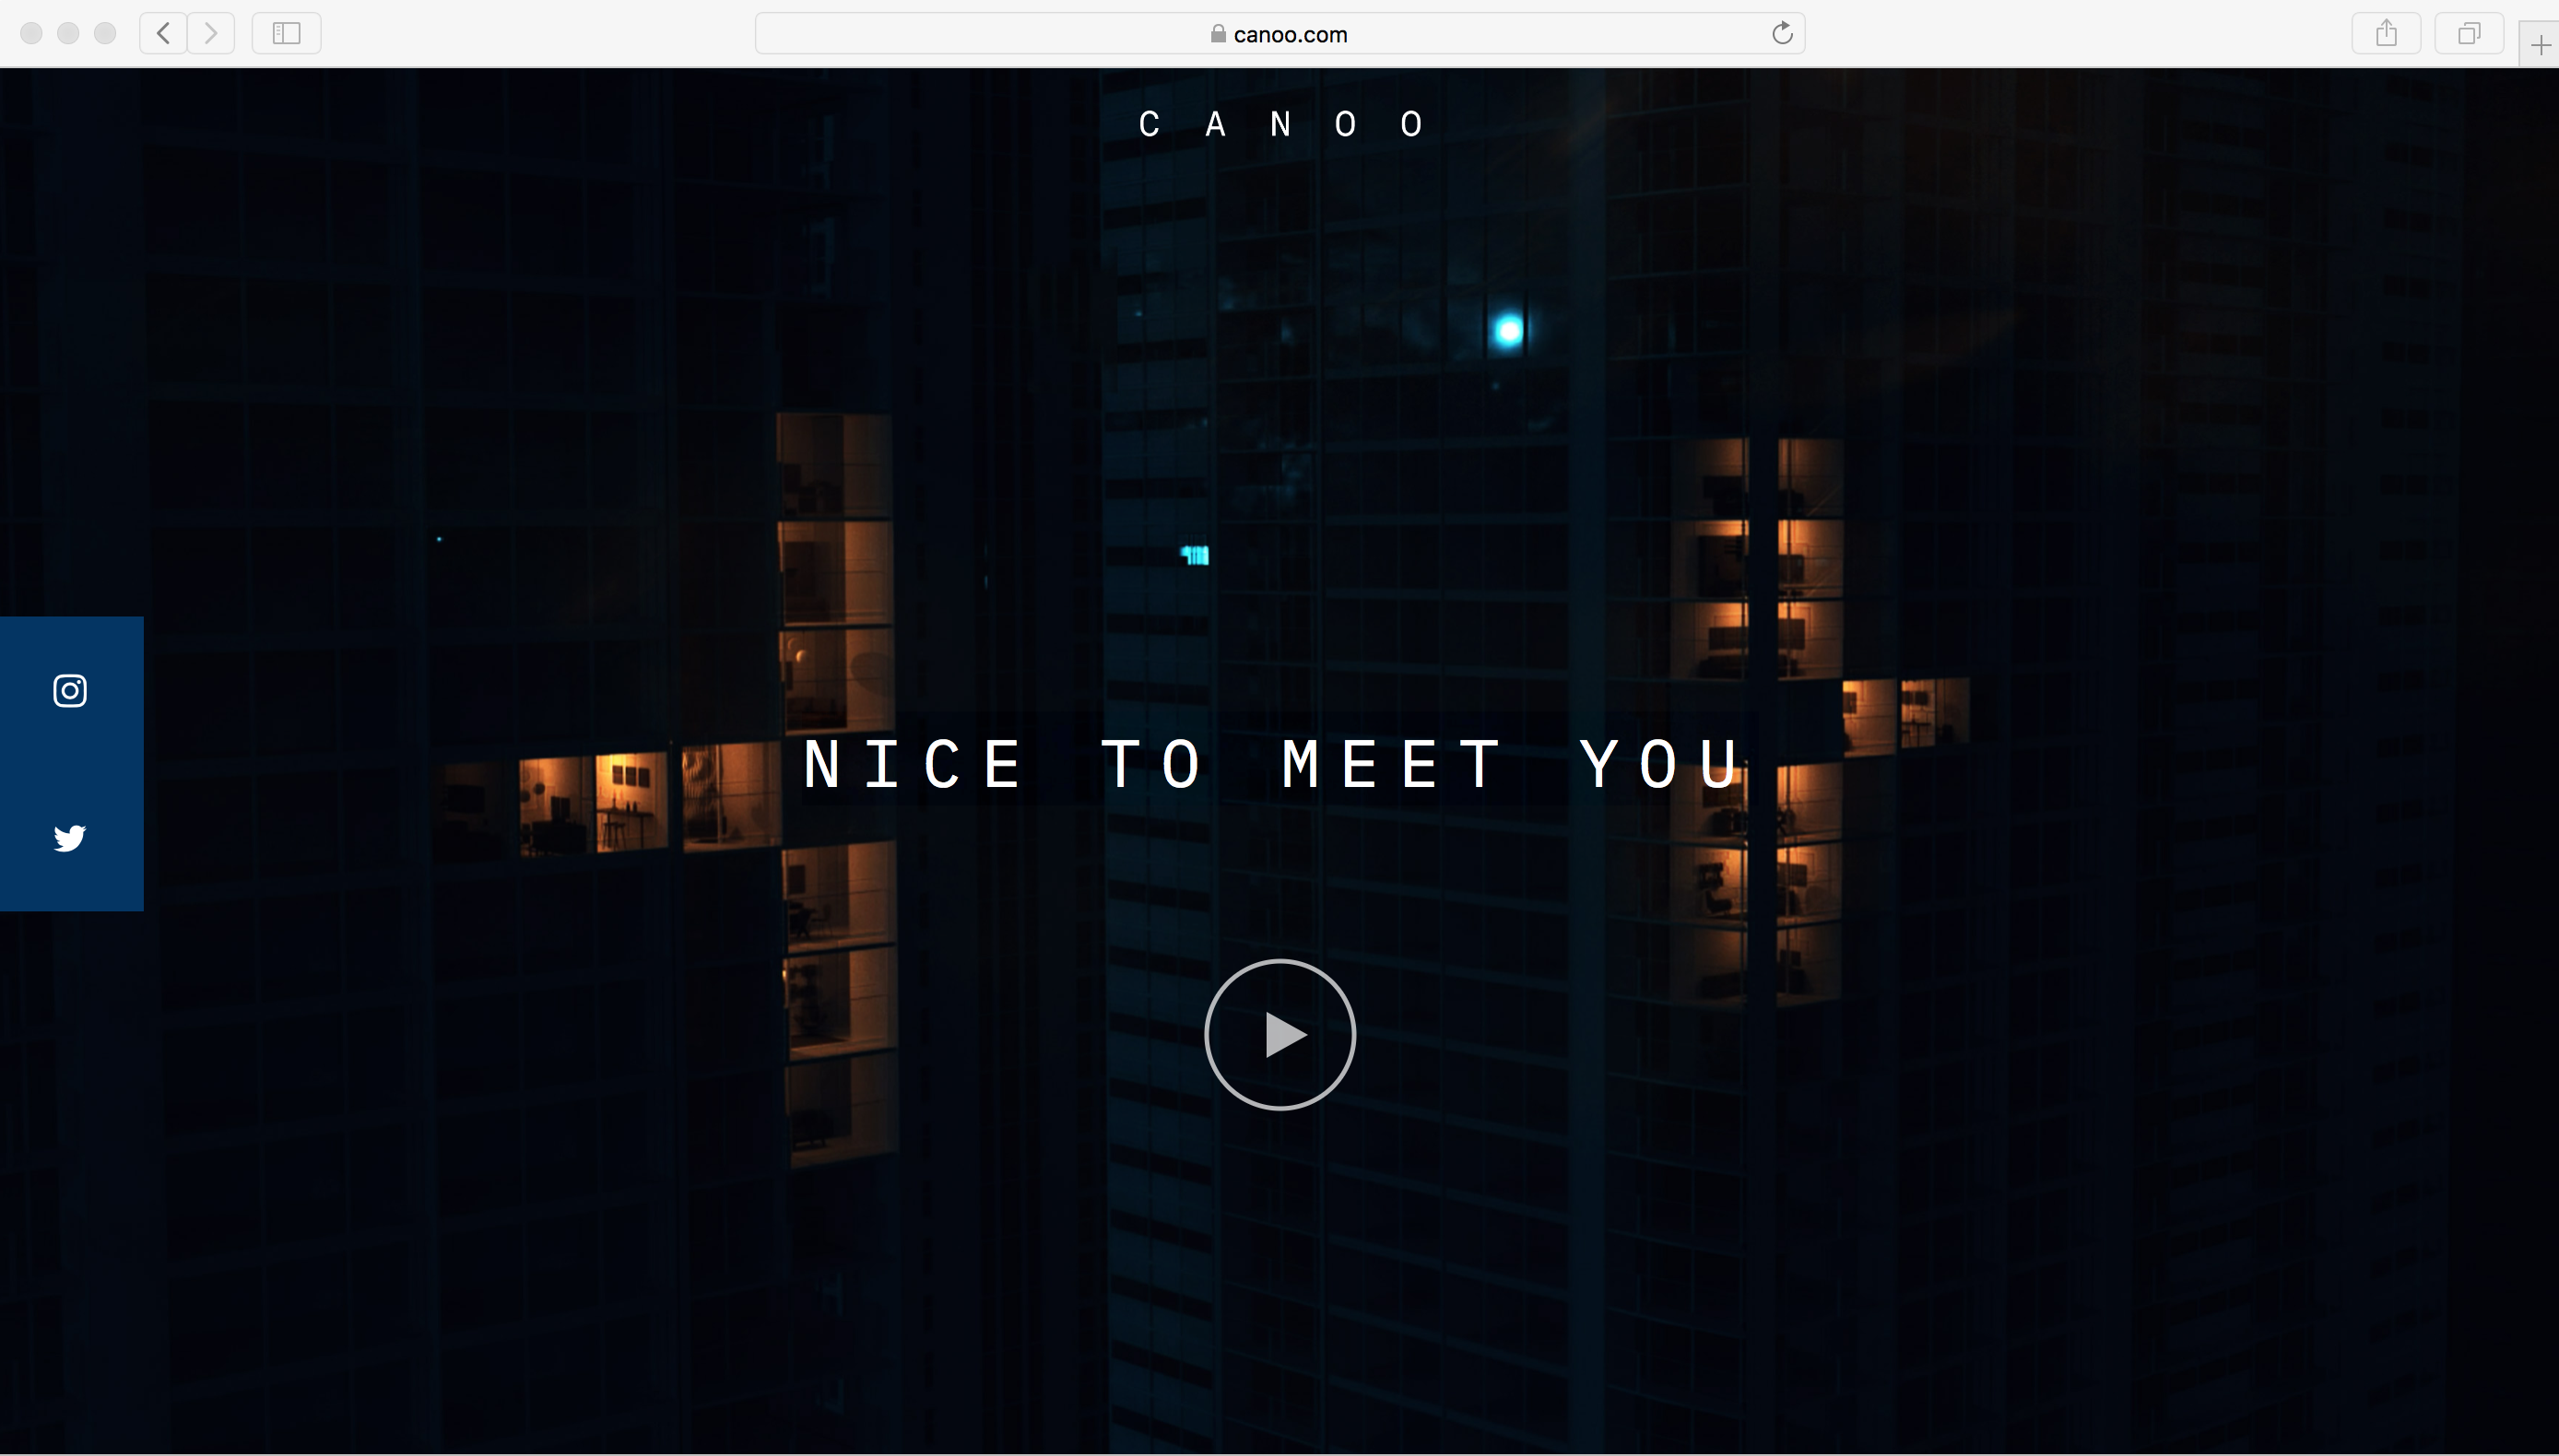 Canoo Webpage 3